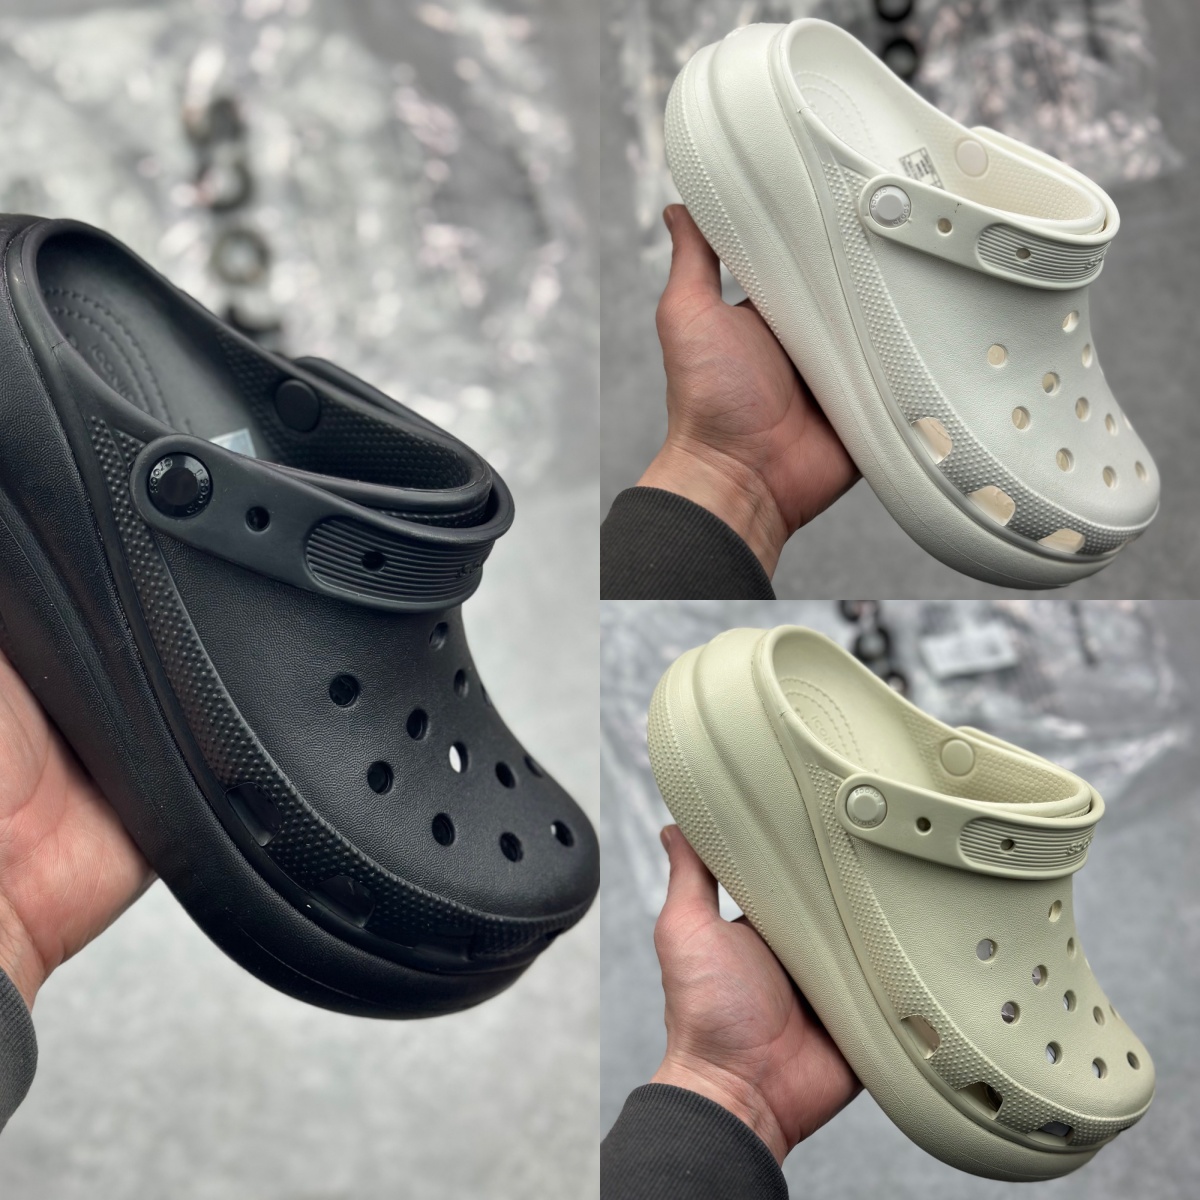 C Style Crocs Beach Sandals